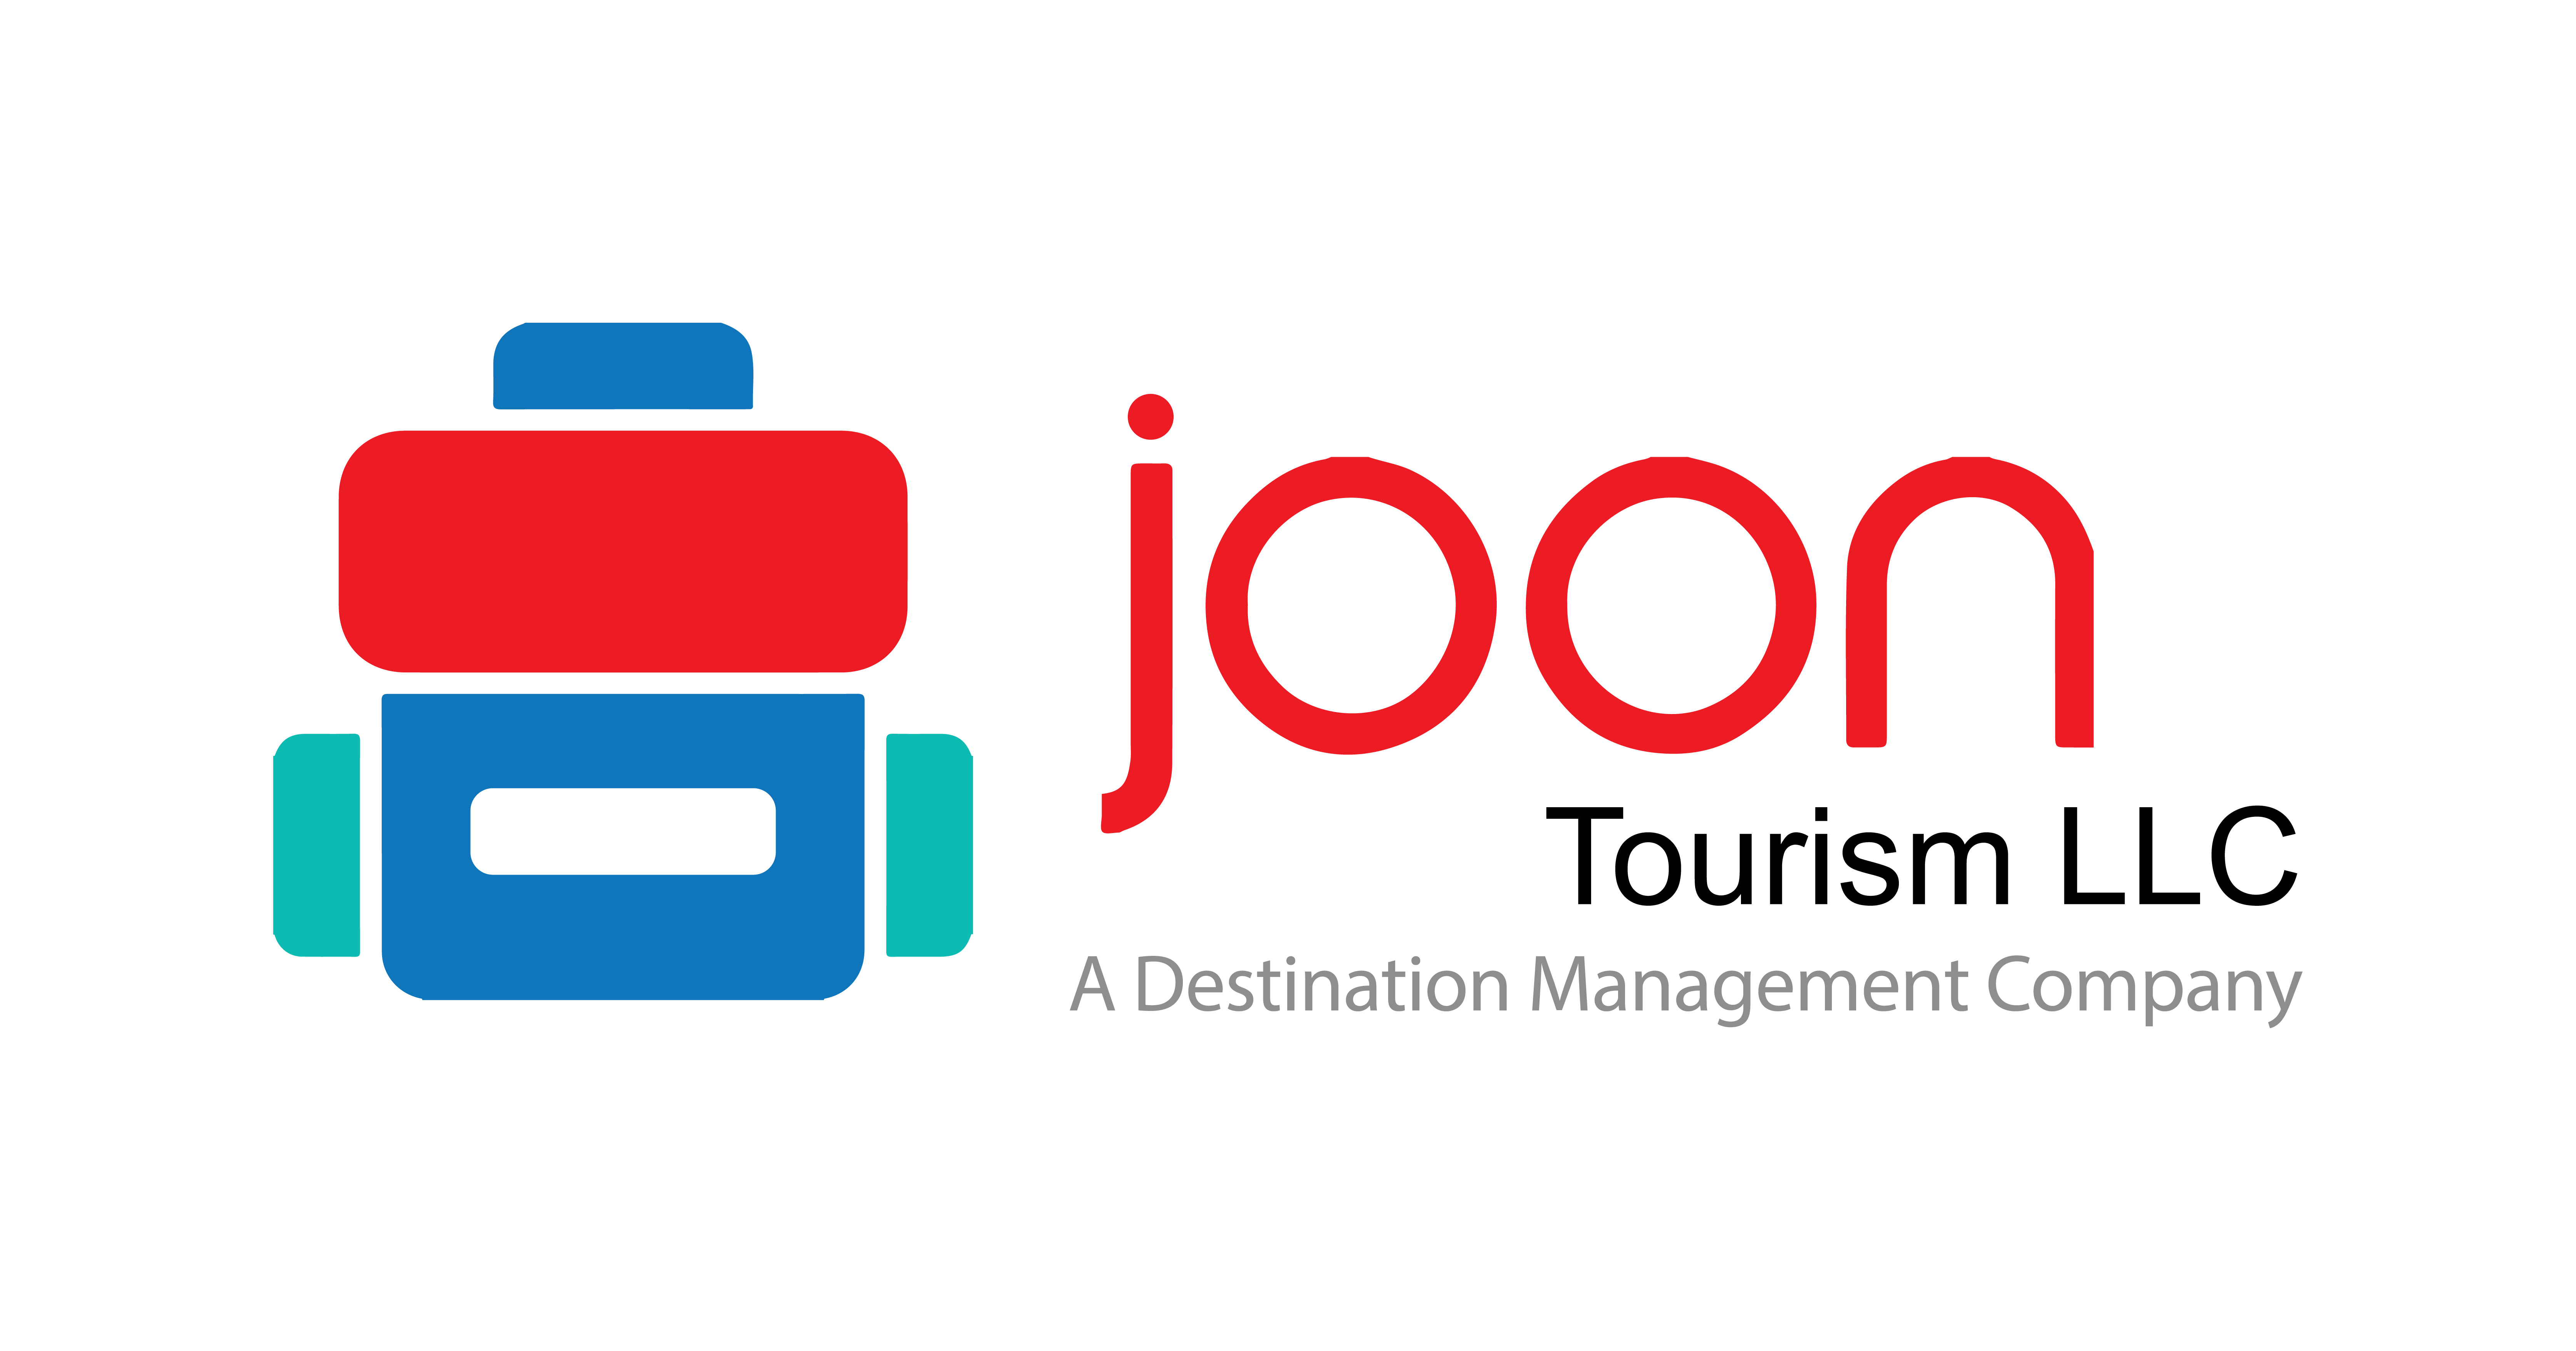 Joon Tourism LLC Logo